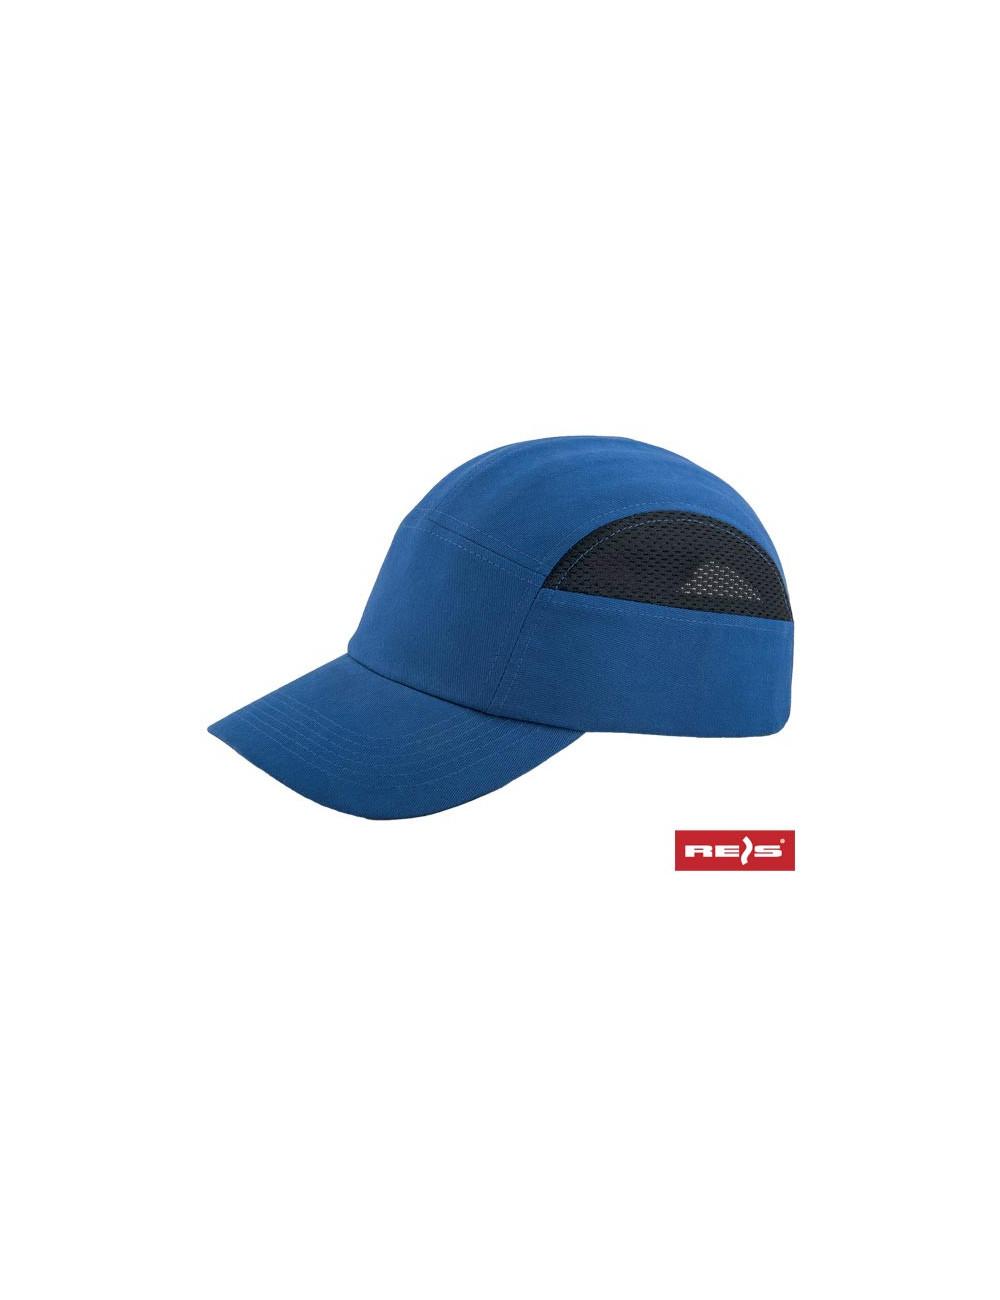 Industrial helmet lightweight bumpcapmesh nb blue/black Reis